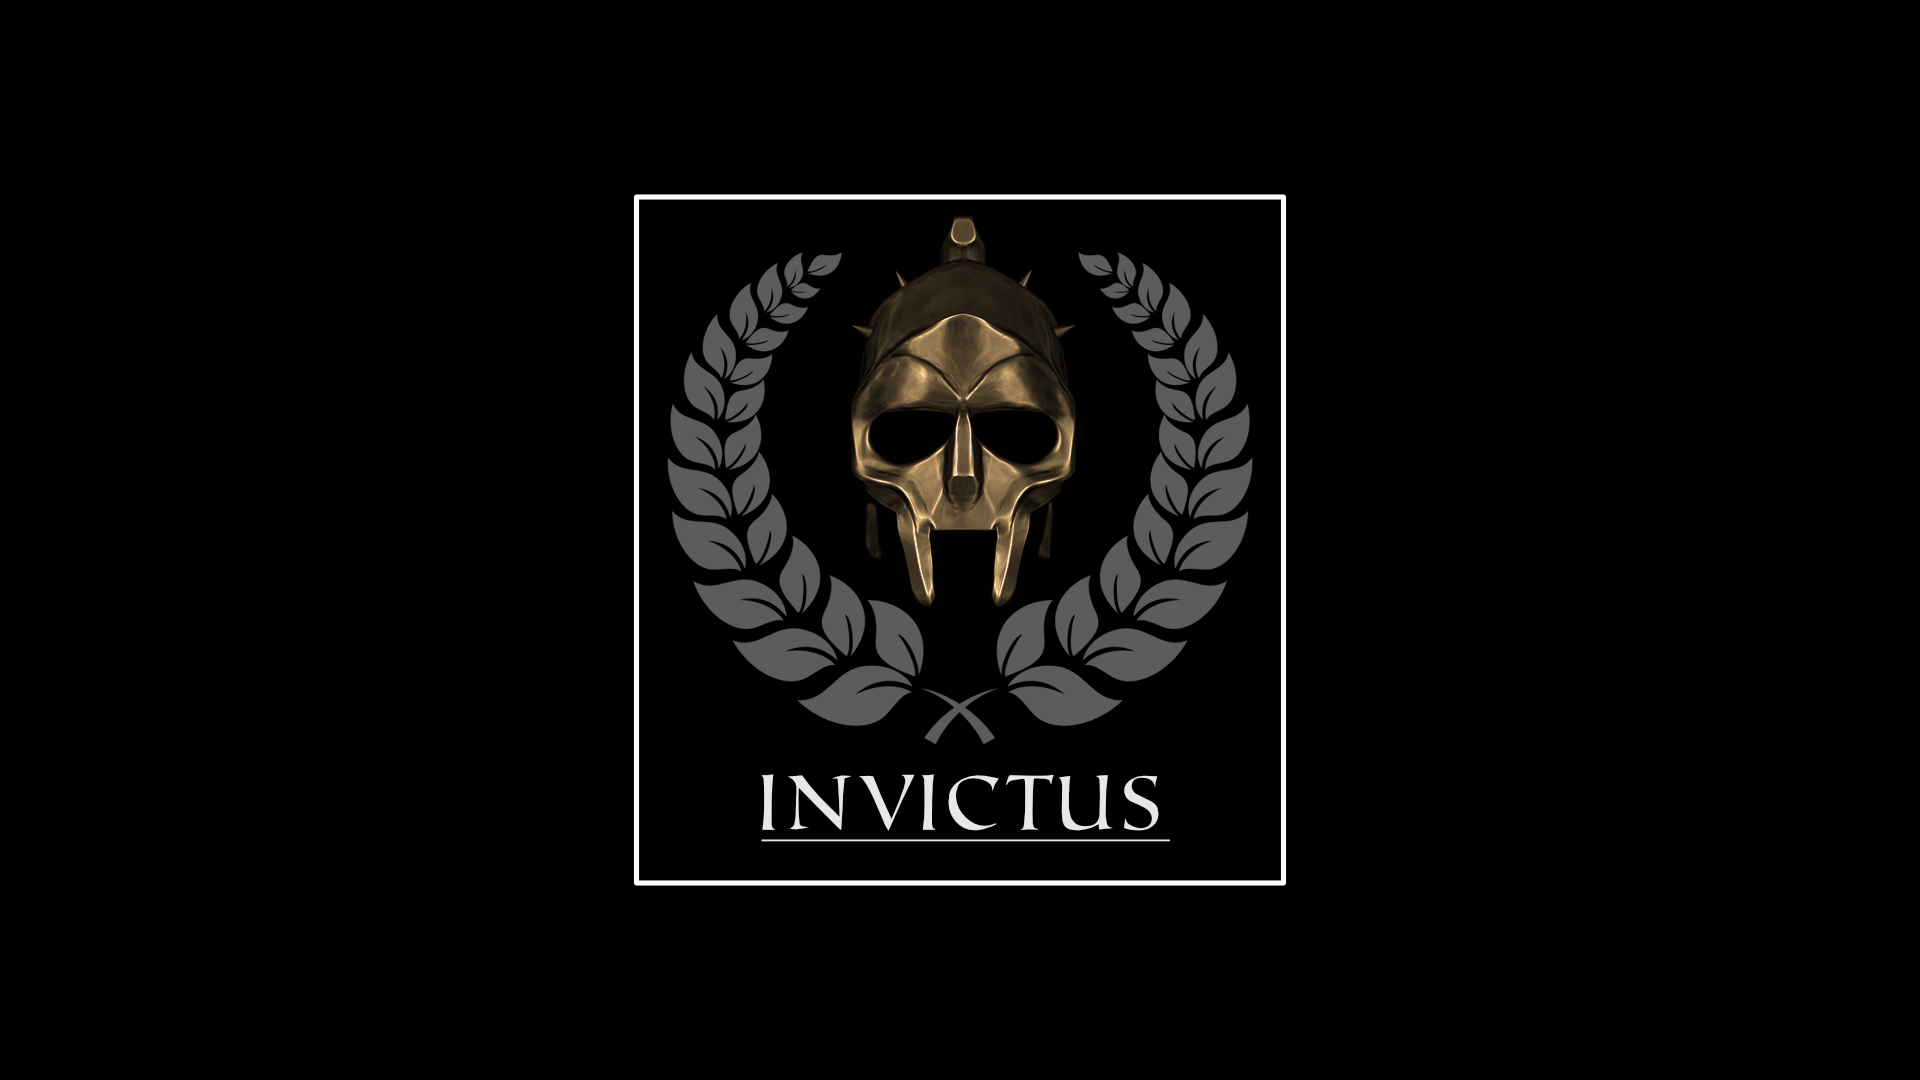 General 1920x1080 helmet Invictus simple background black background typography logo